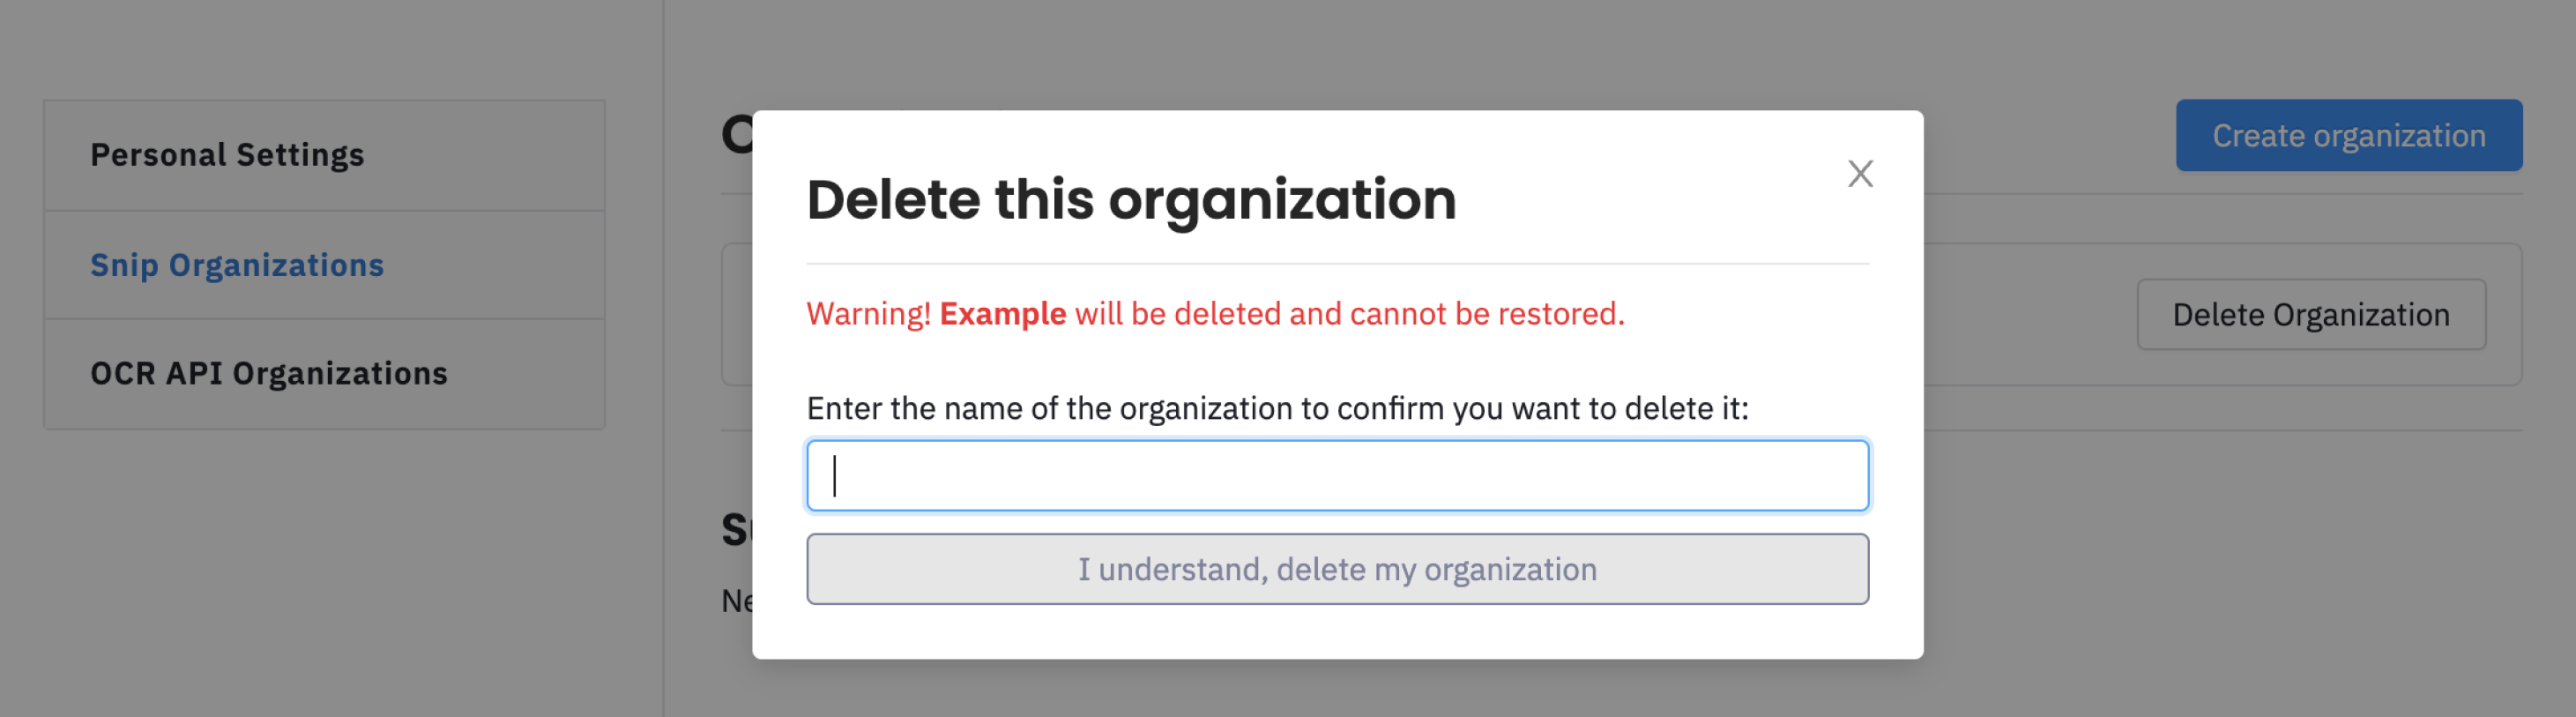 Delete organization modal